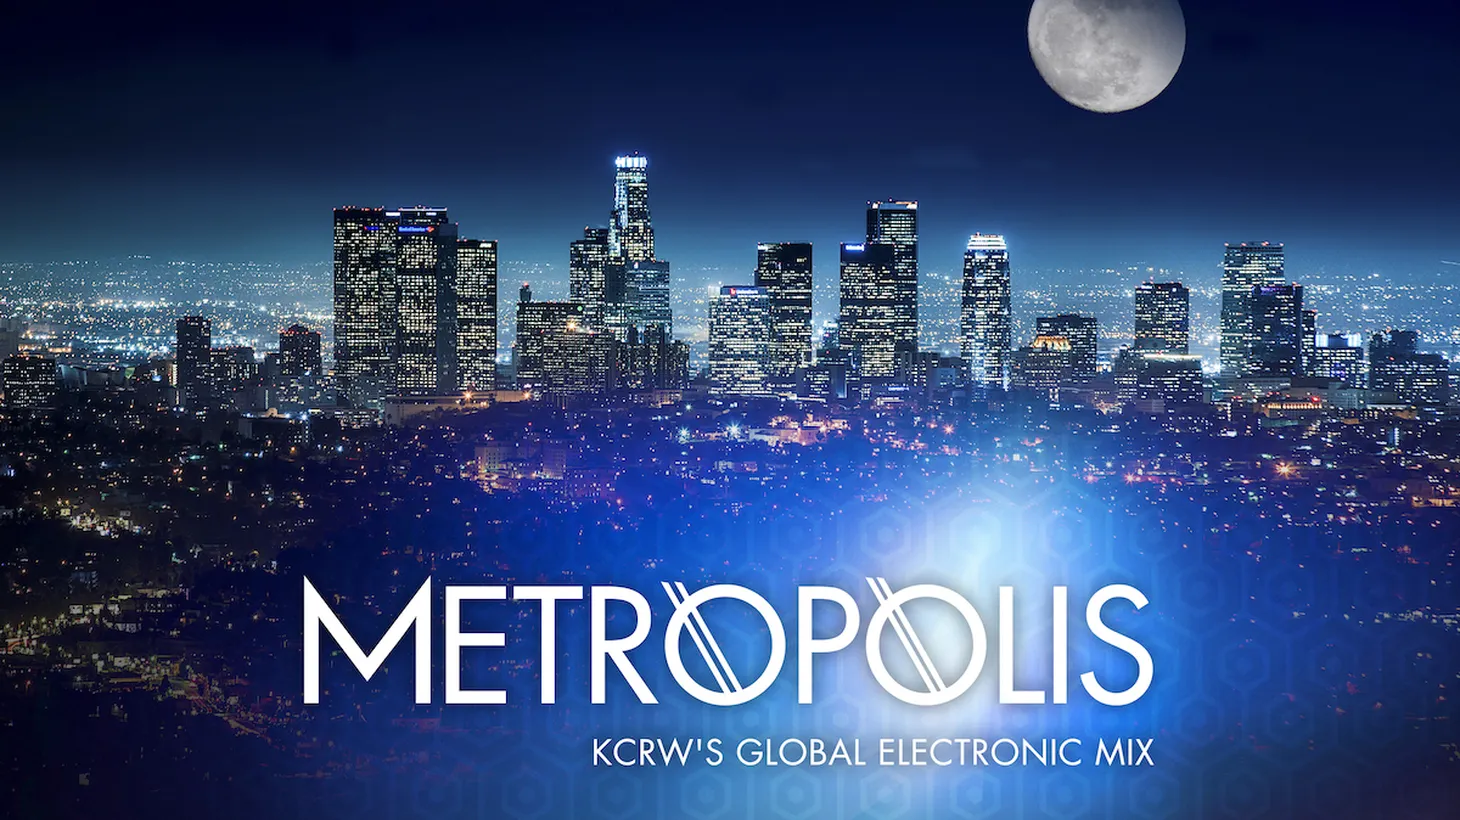 Metropolis playlist, September 18, 2021.